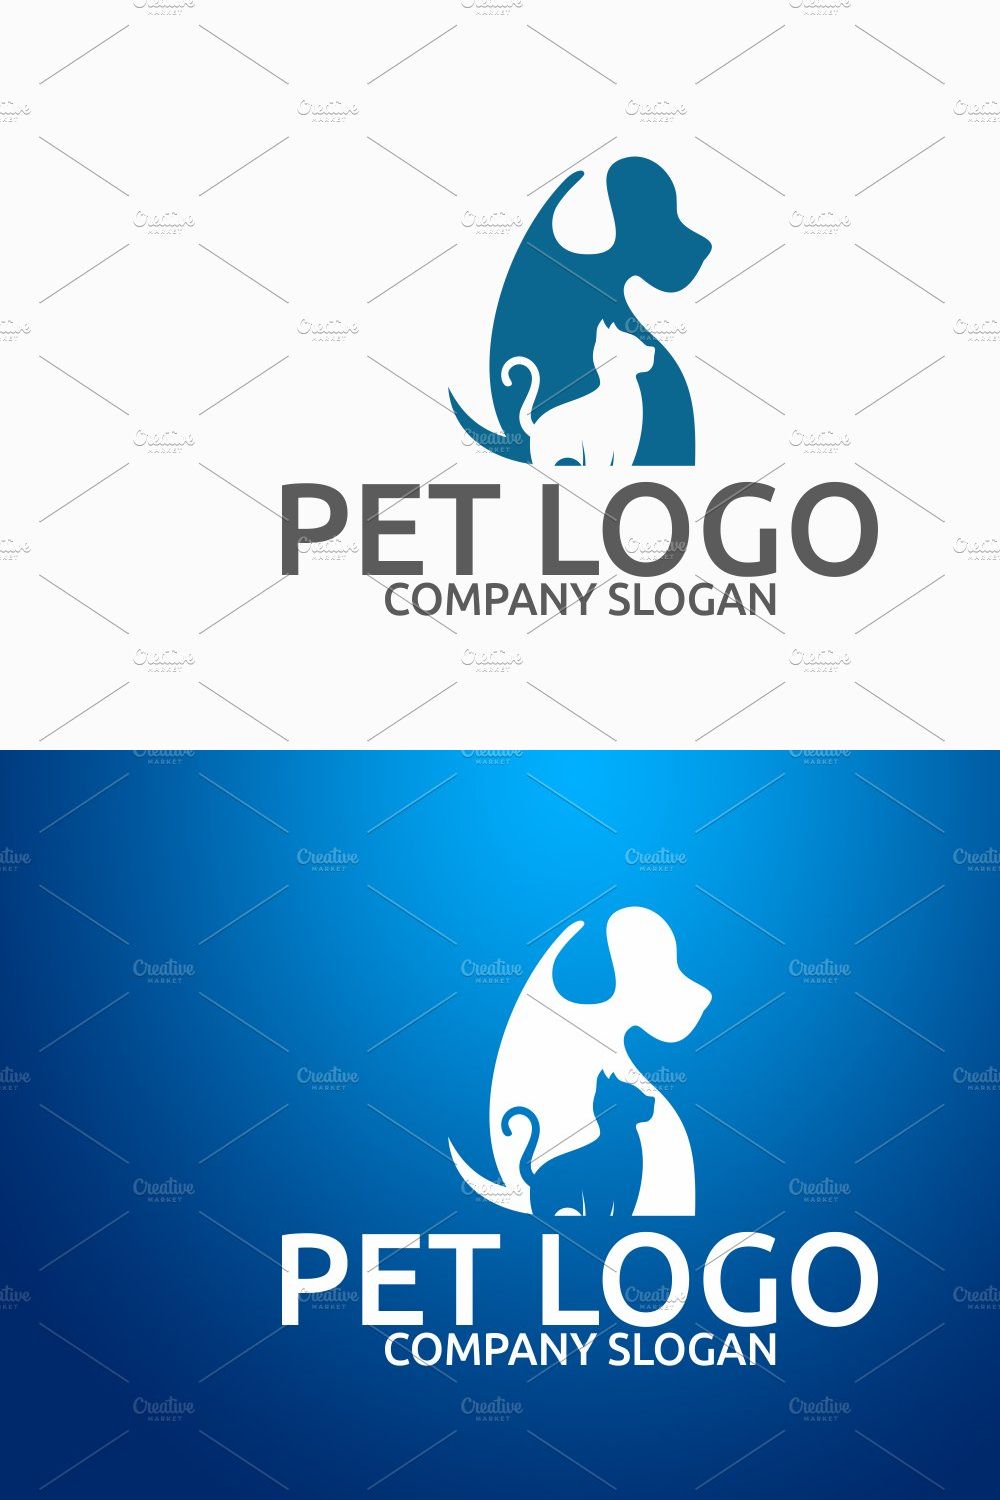 Pet Logo pinterest preview image.